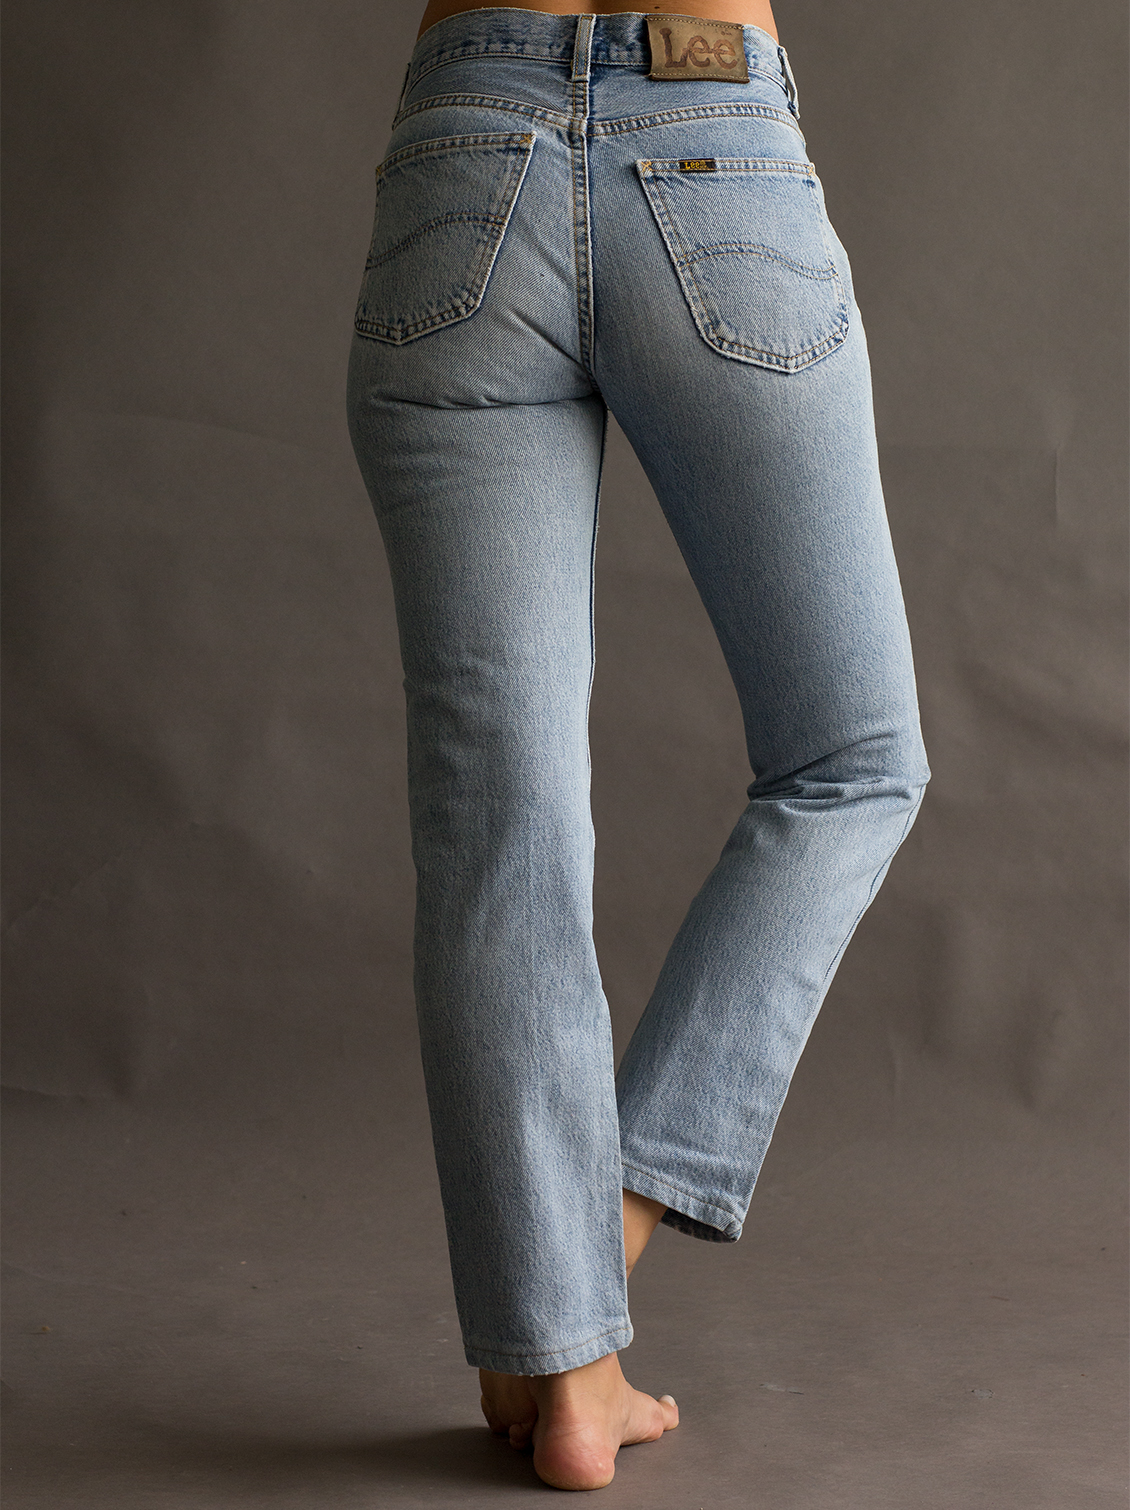 Vintage Lee Jeans - W29 - Î¡ÎÎ¥Î§Î